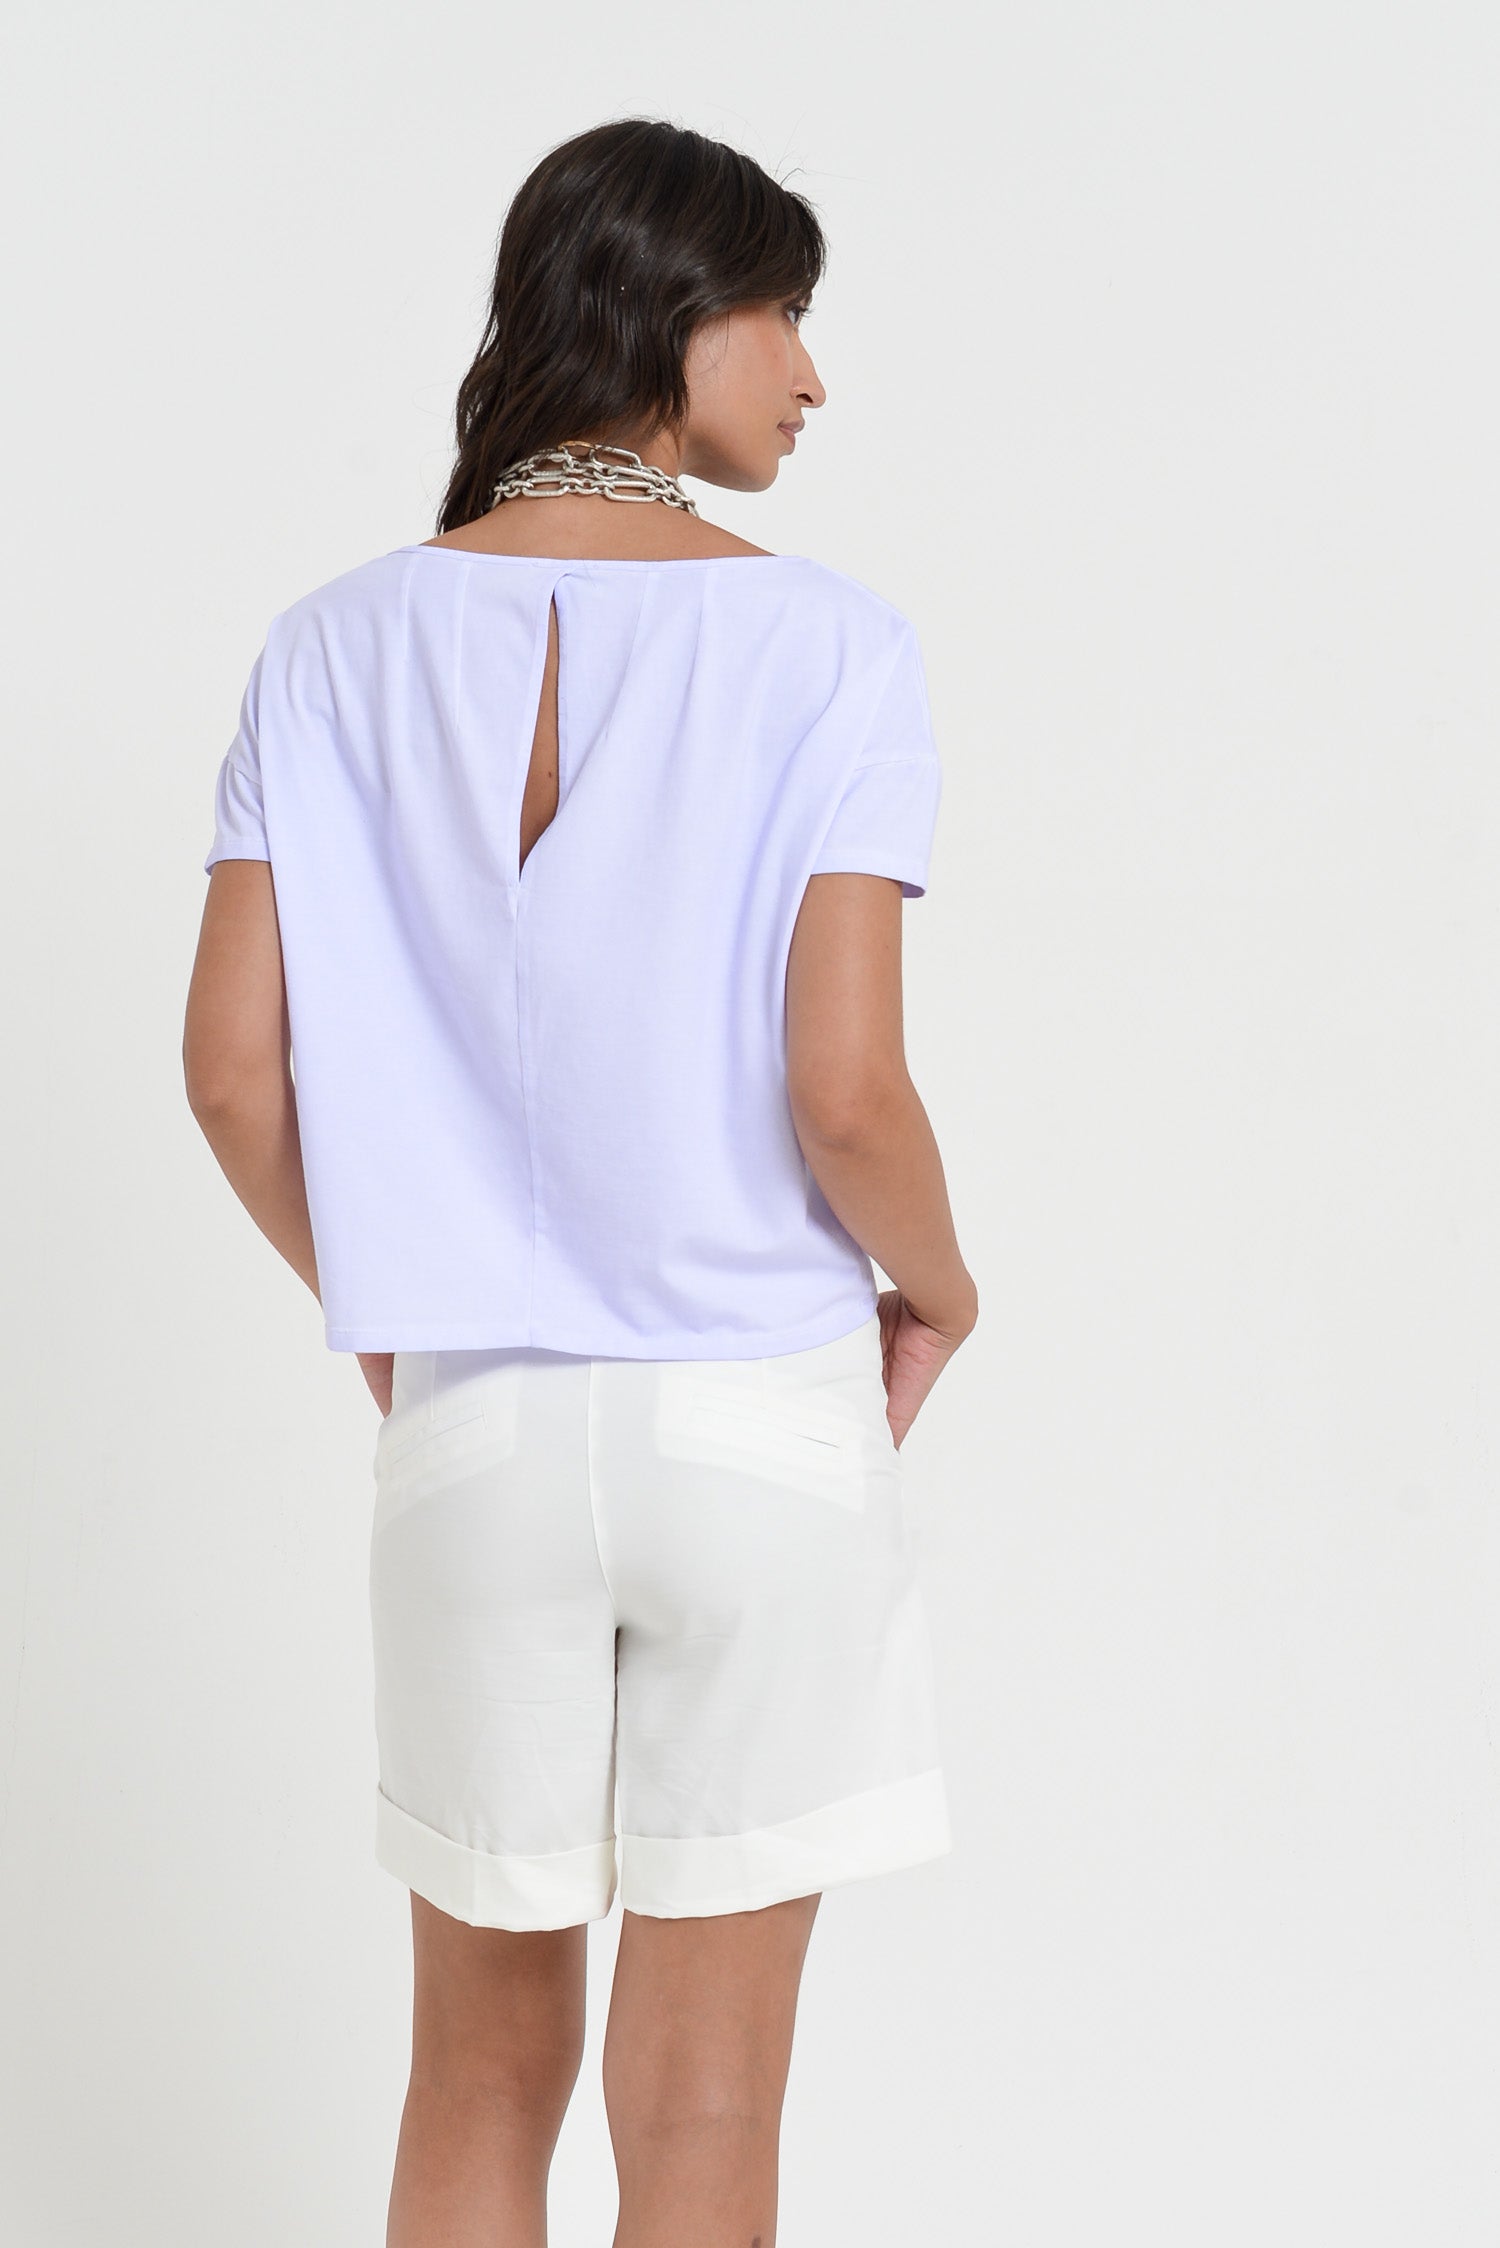 Creta T-Shirt - Women's Stretchy Cotton T-Shirt - Lilac